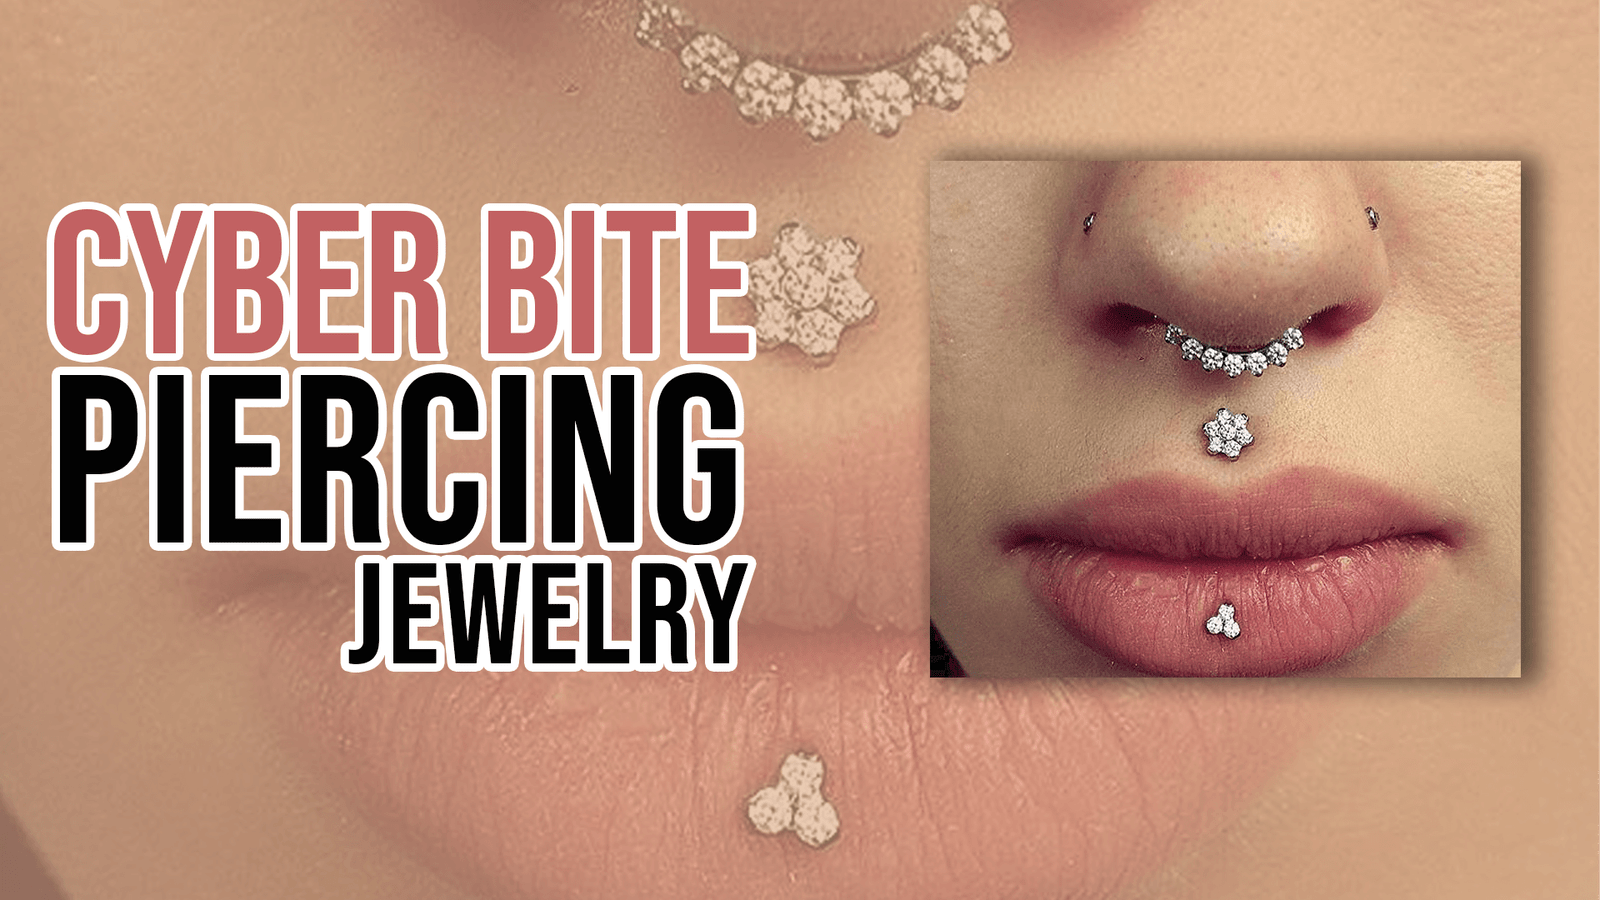 Cyber Bite Piercing Jewelry